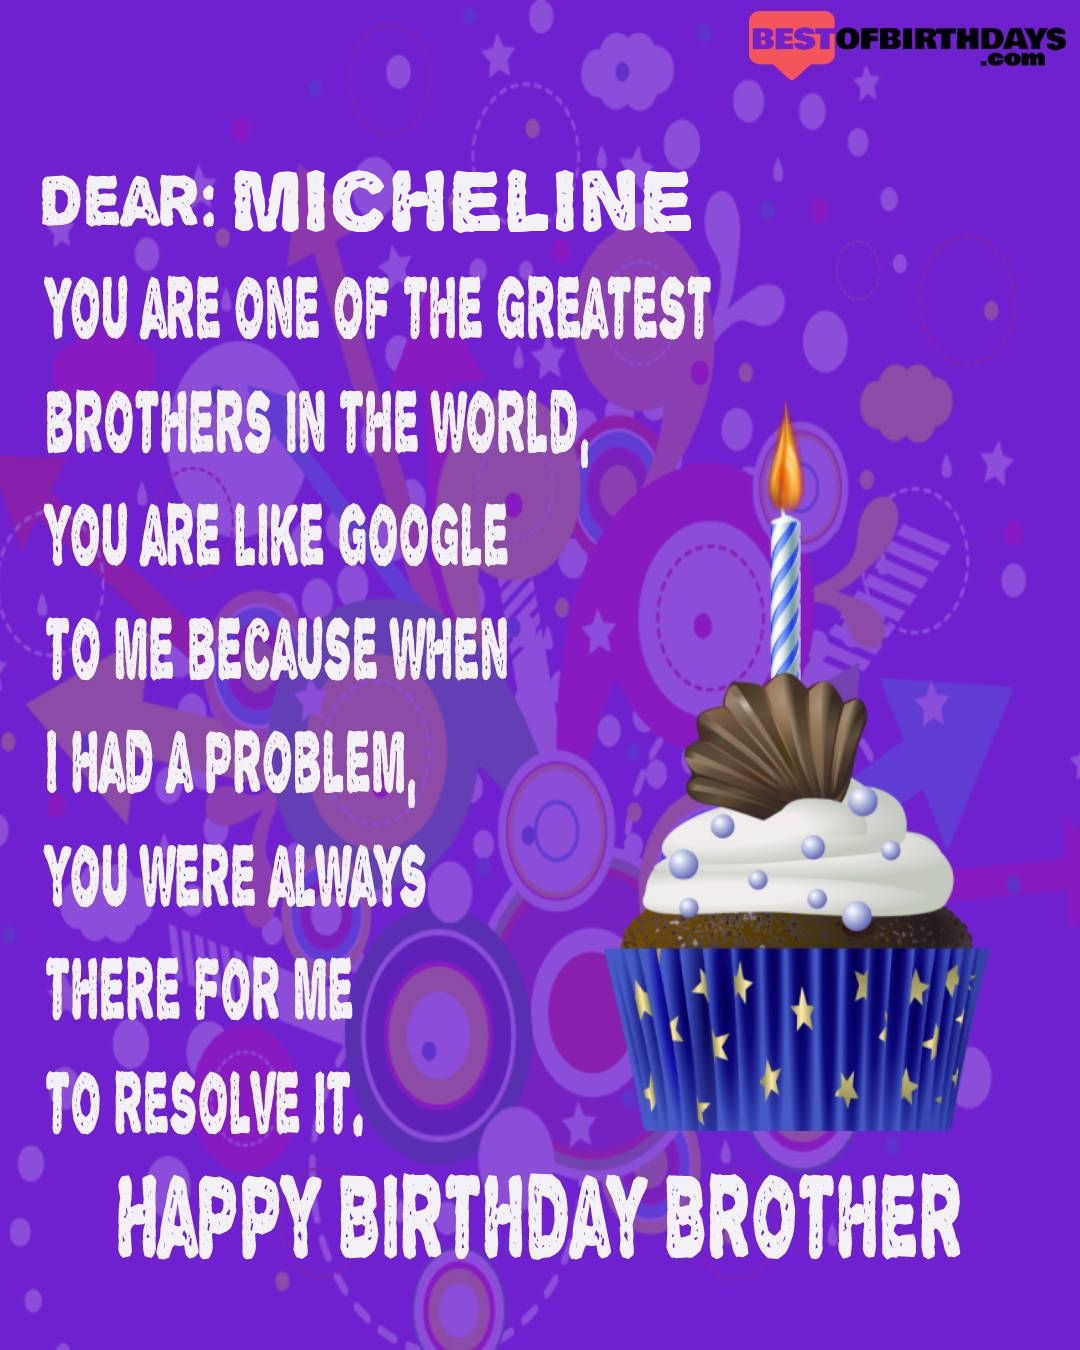 Happy birthday micheline bhai brother bro